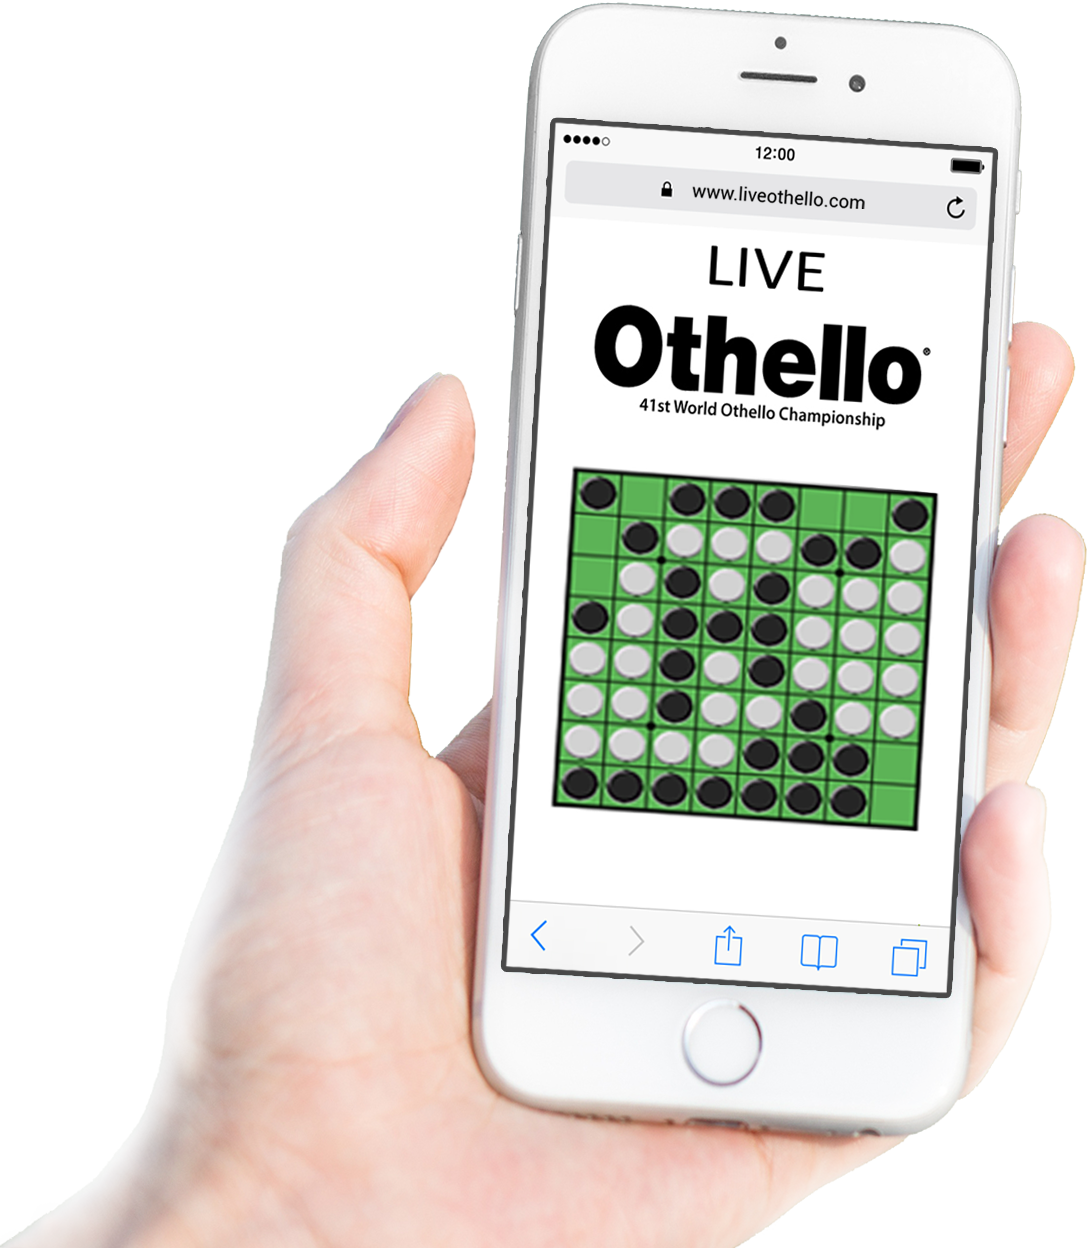 Othello World Championship 2017